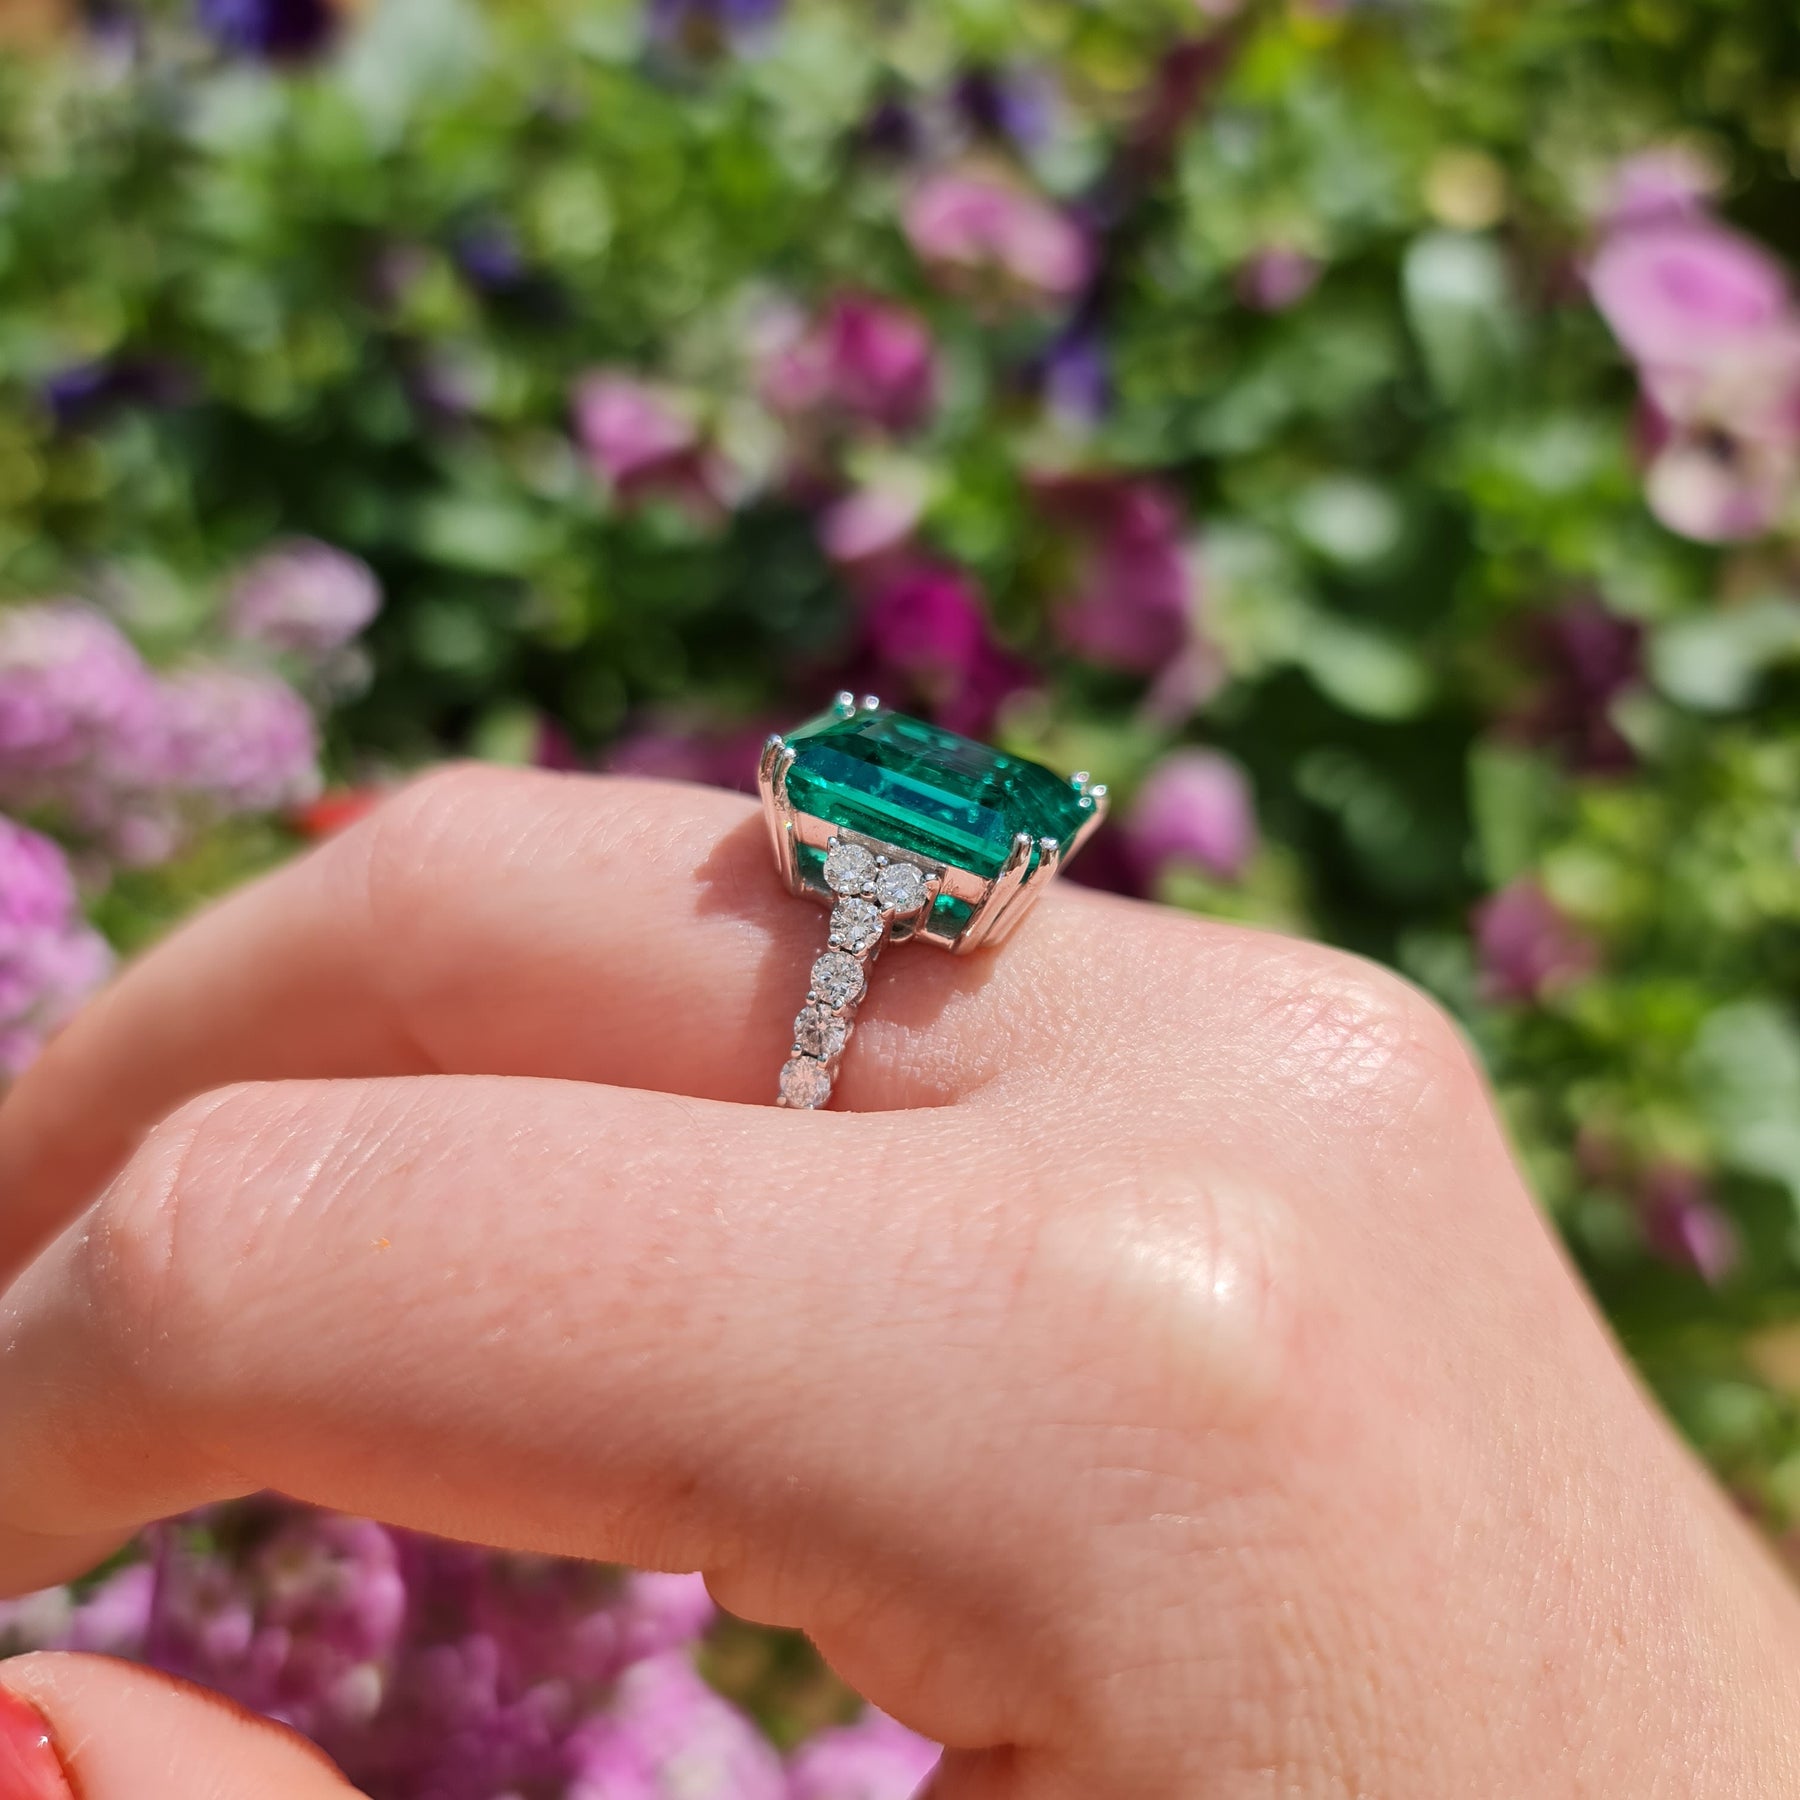 Natural Emerald Shamrock Celtic Knot Engagement Ring Set 14K Yellow Gold Emerald  Ring Irish Engagement Ring with Matching Band - Camellia Jewelry